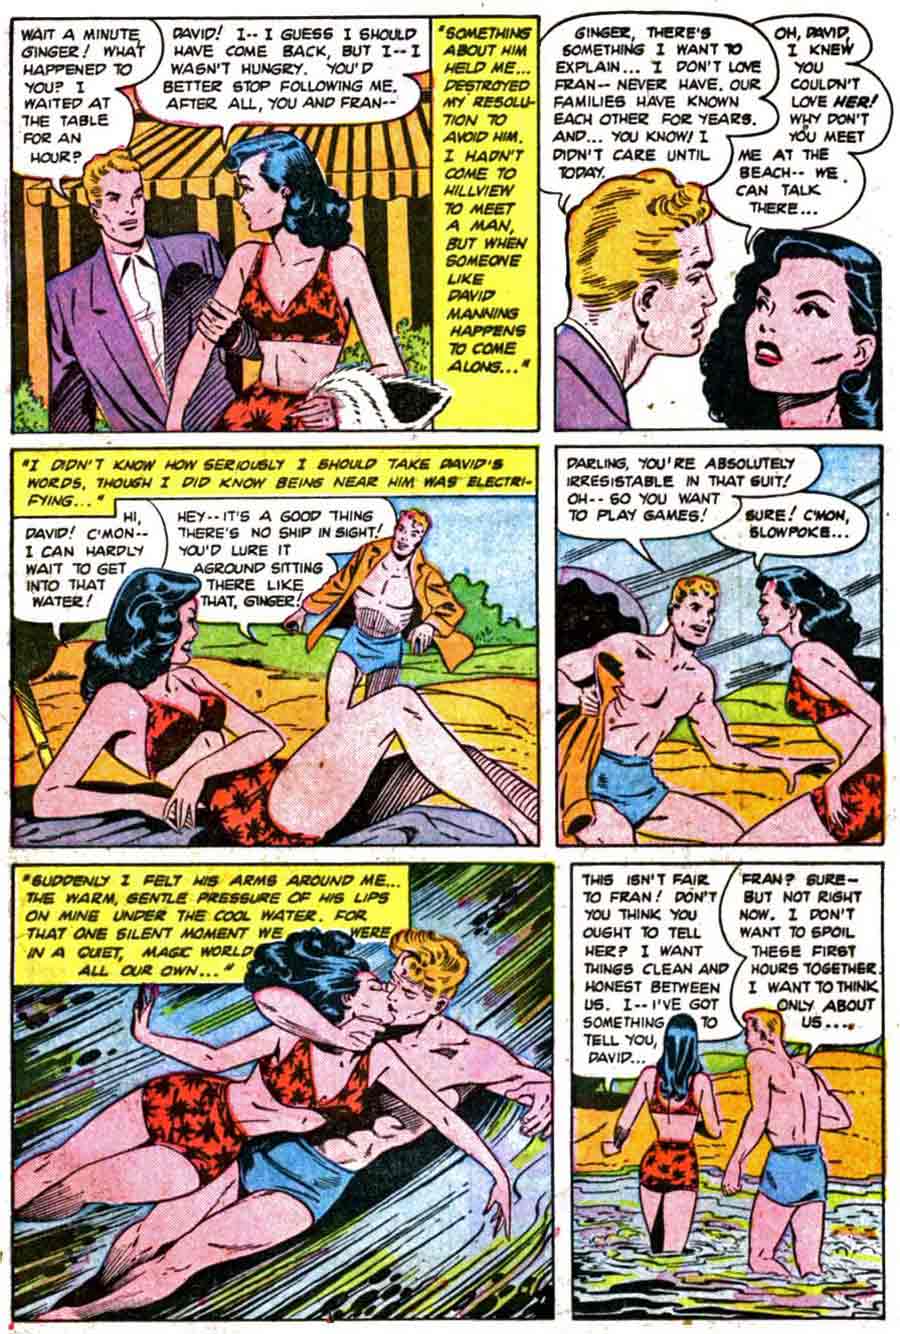 Pictorial Romances #4 st. john golden age 1950s romance comic book page art by Matt Baker